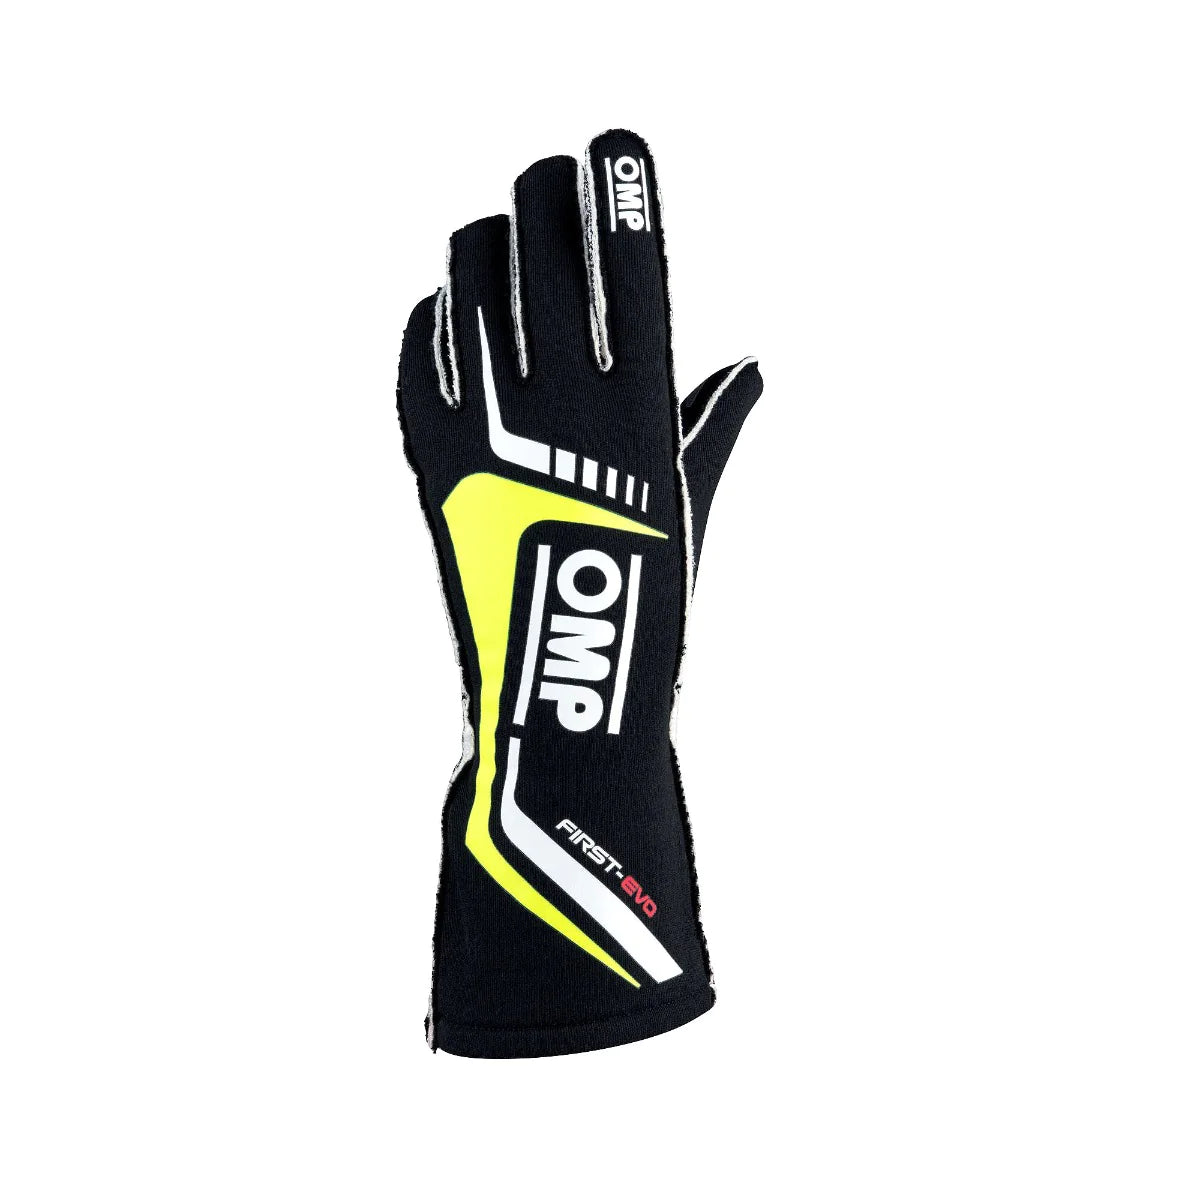 OMP - First Evo Nomex Gloves